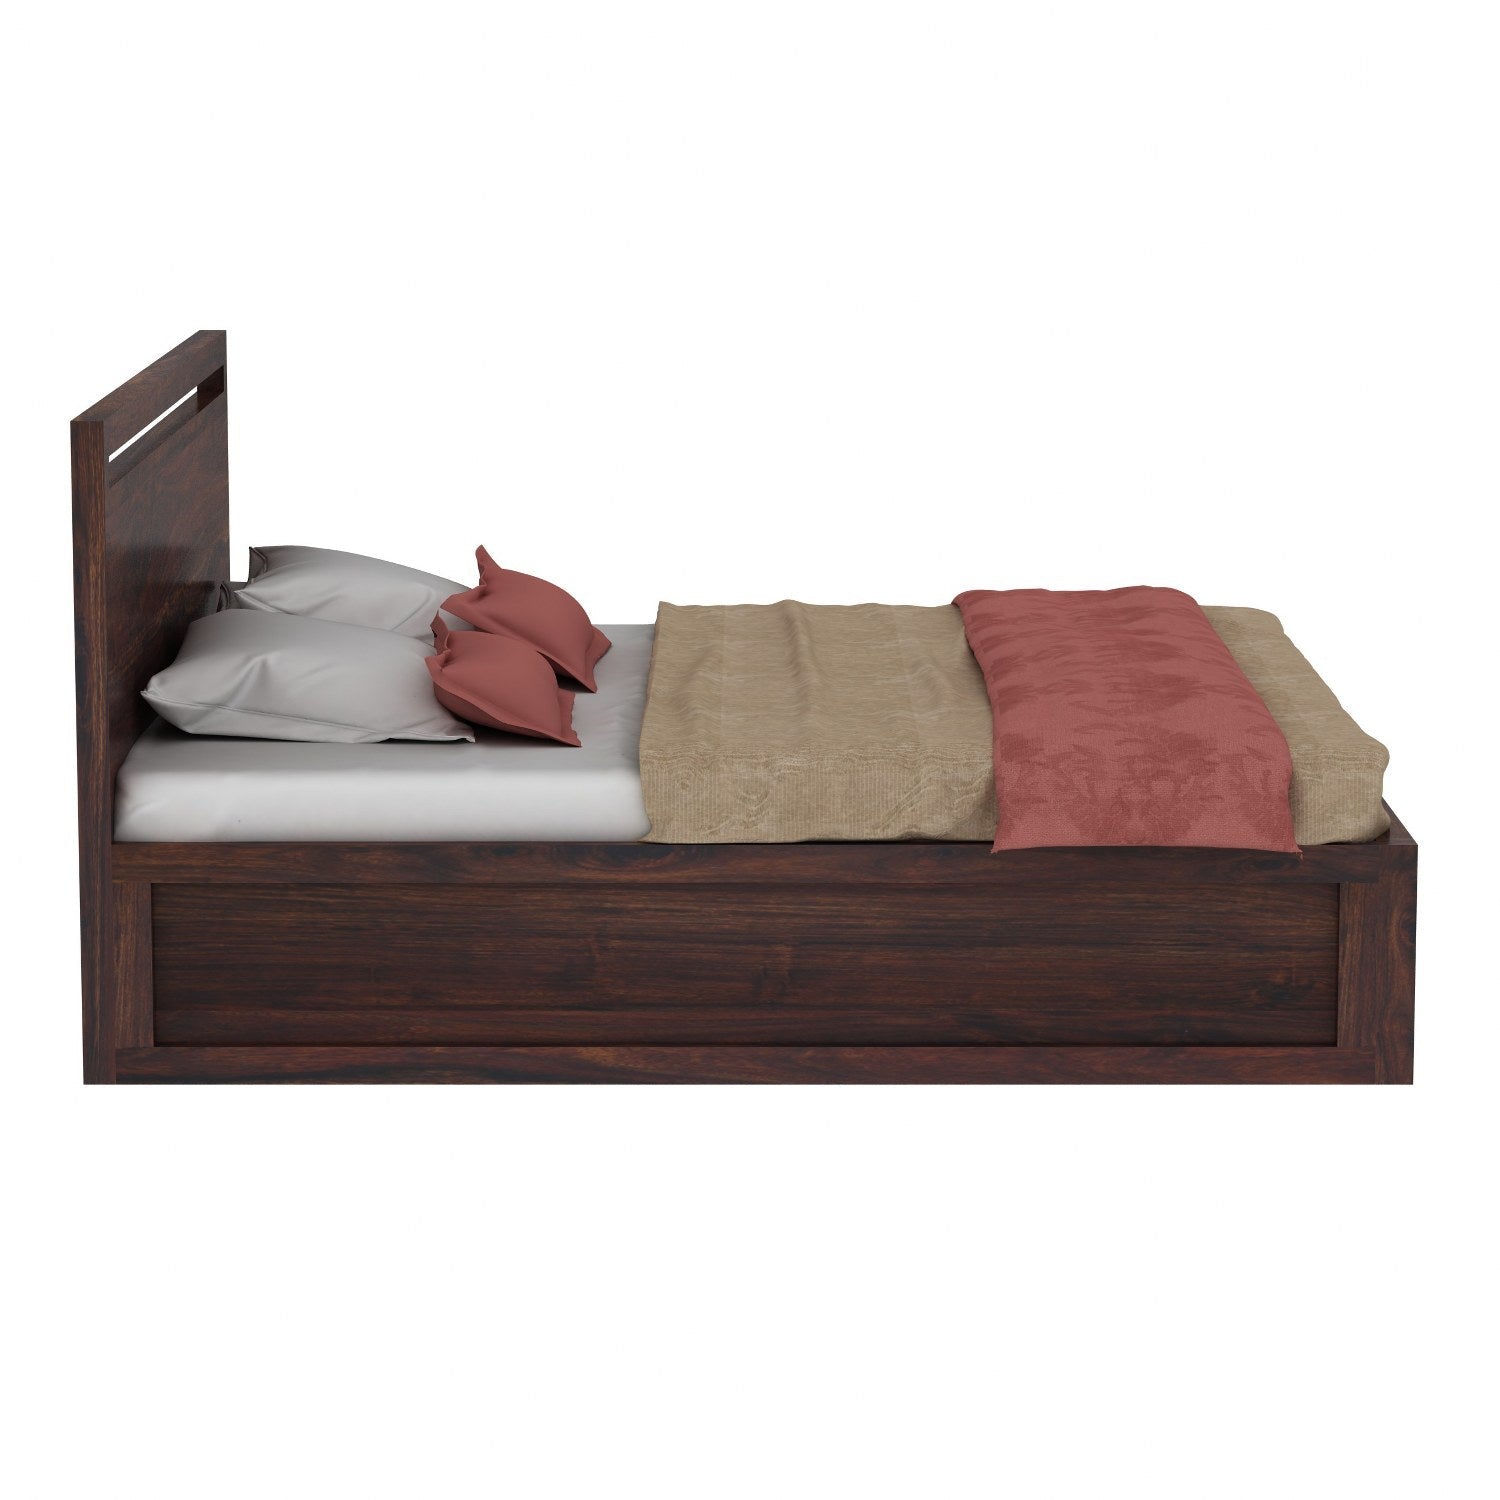 Livinn Solid Sheesham Wood Hydraulic Bed With Box Storage (Queen Size, Walnut Finish)